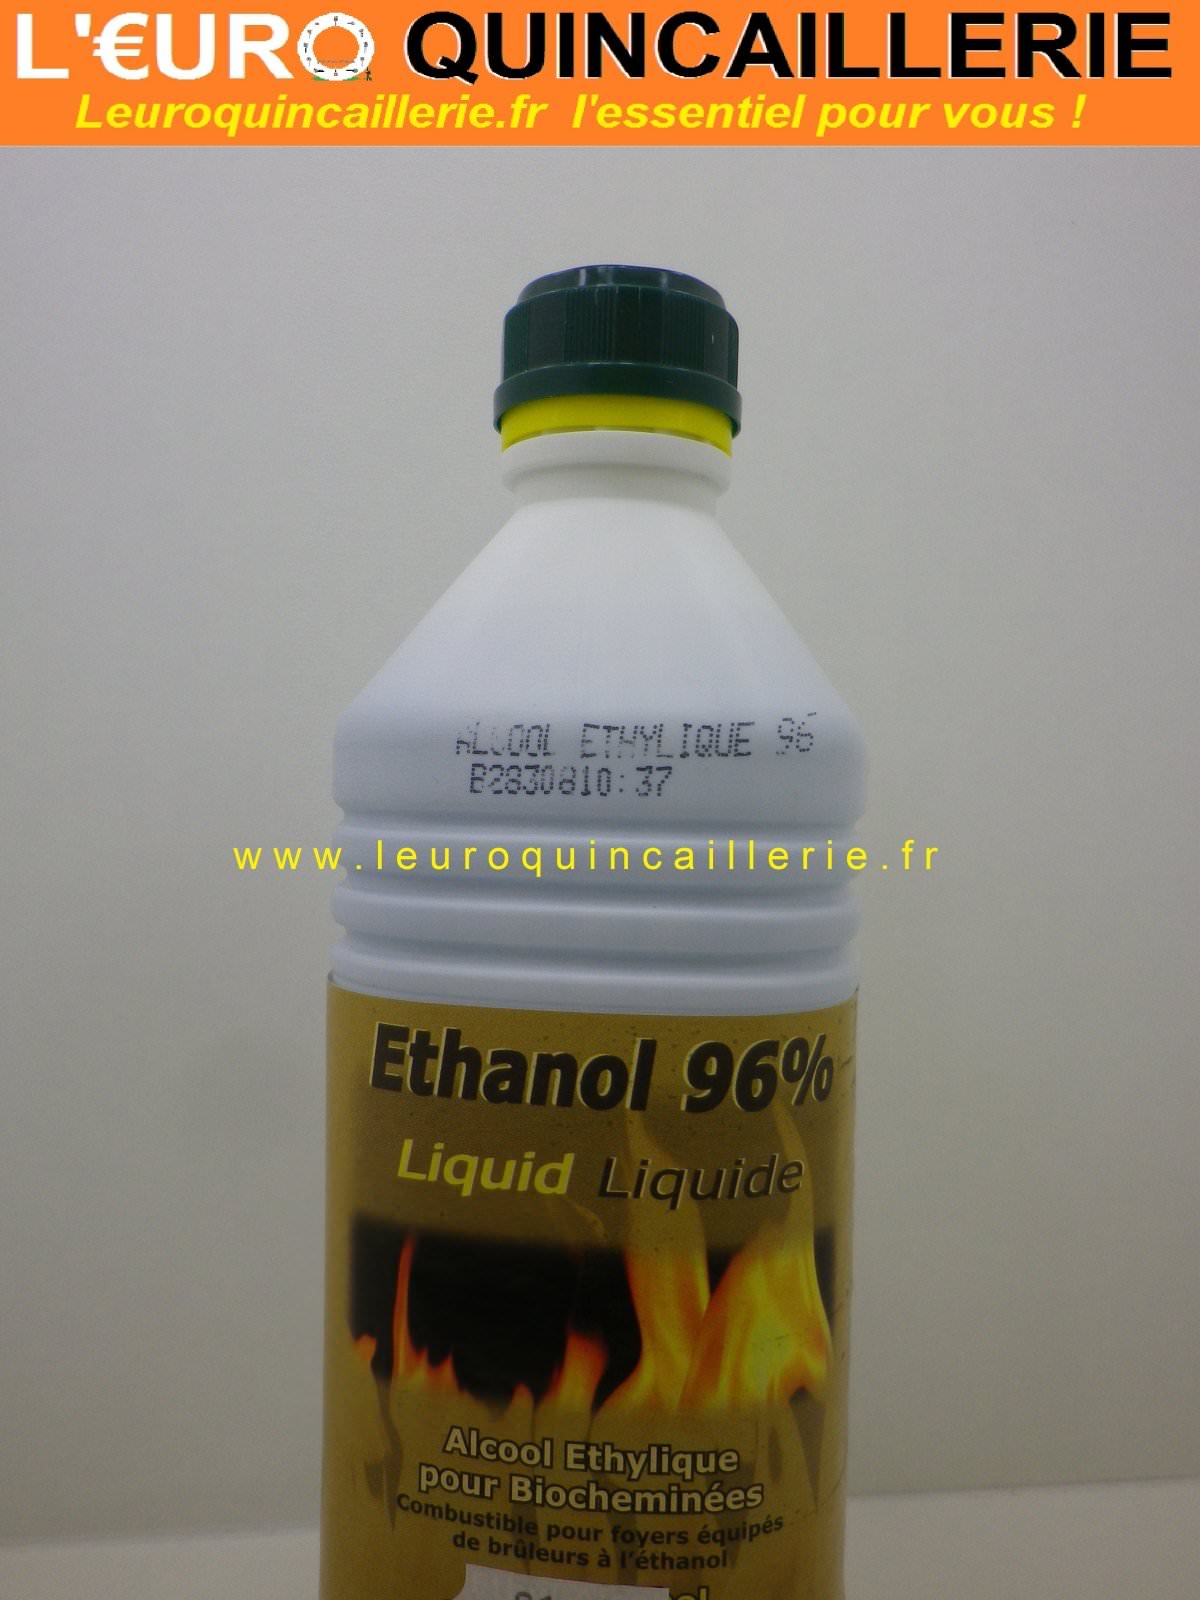 ethanol denature